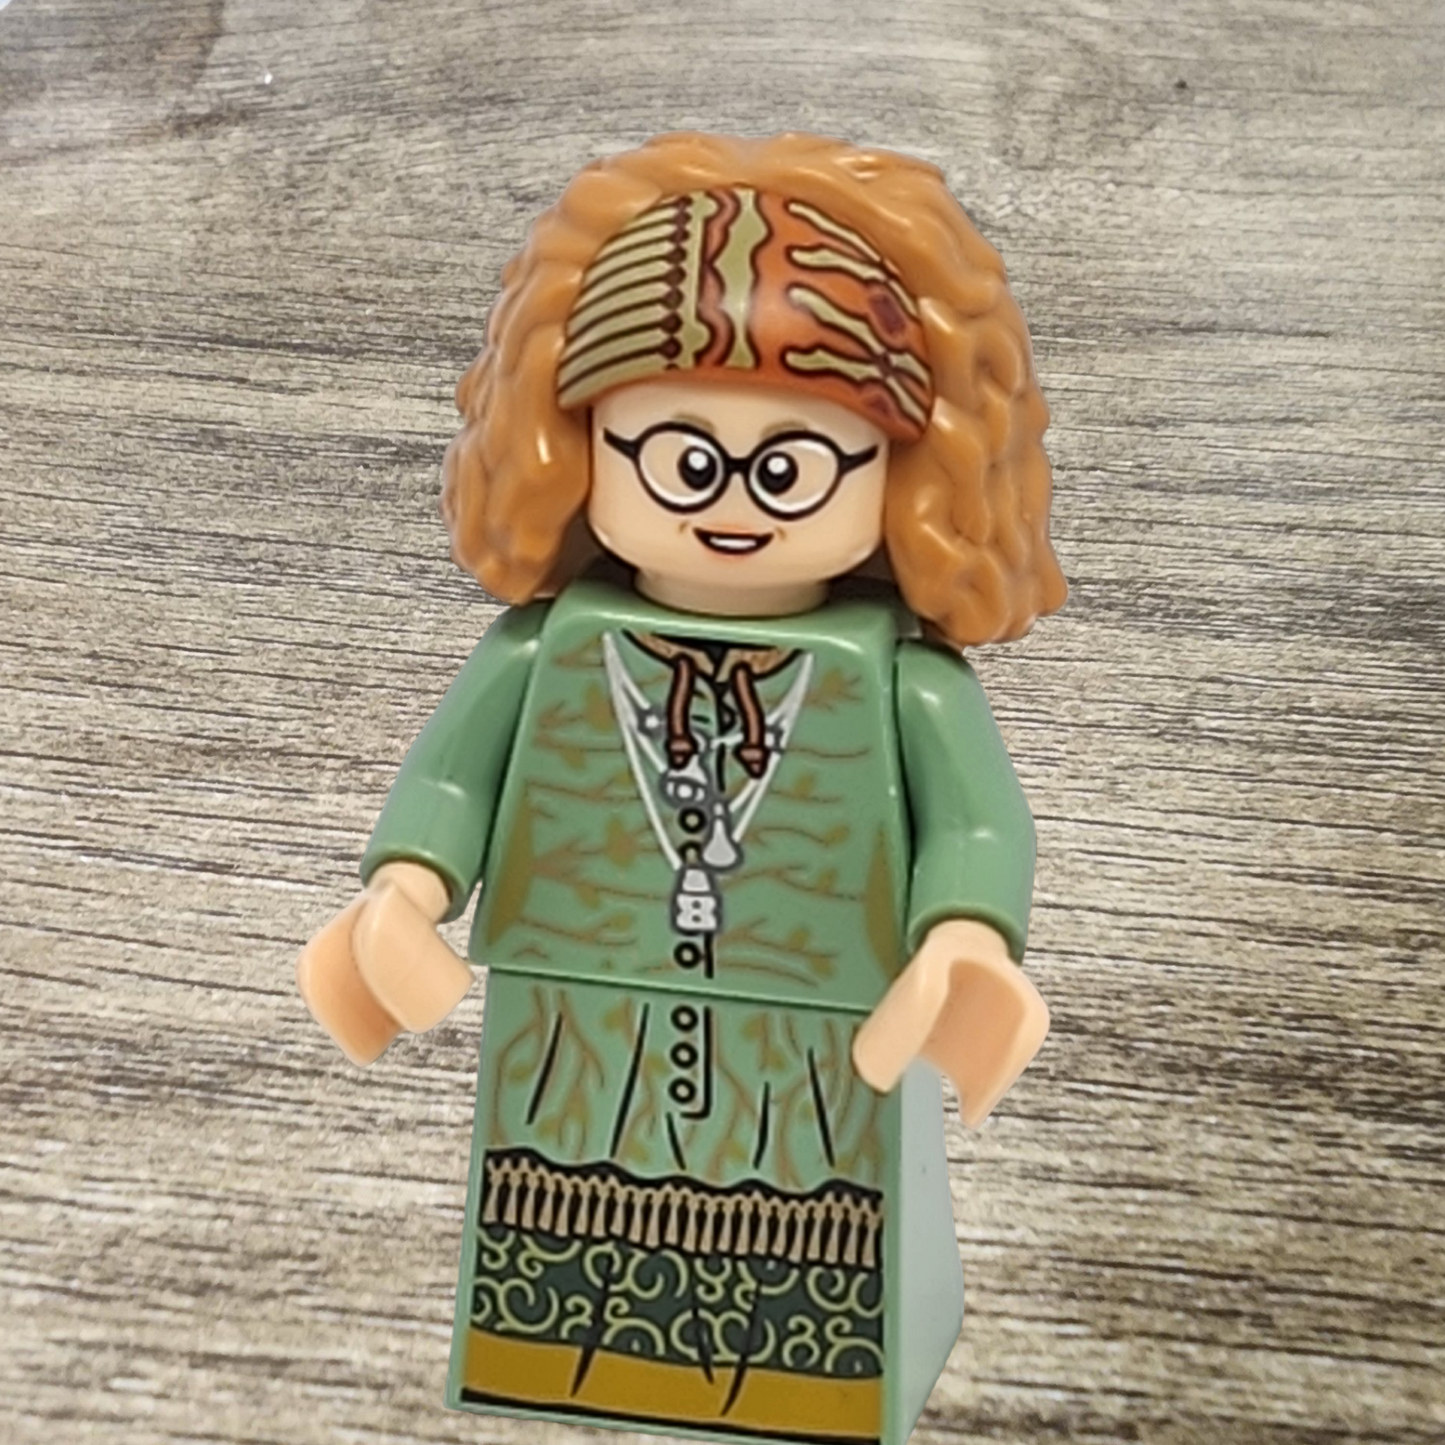 Lego Professor Trelawney Harry Potter Series 1 Minifigure colhp11